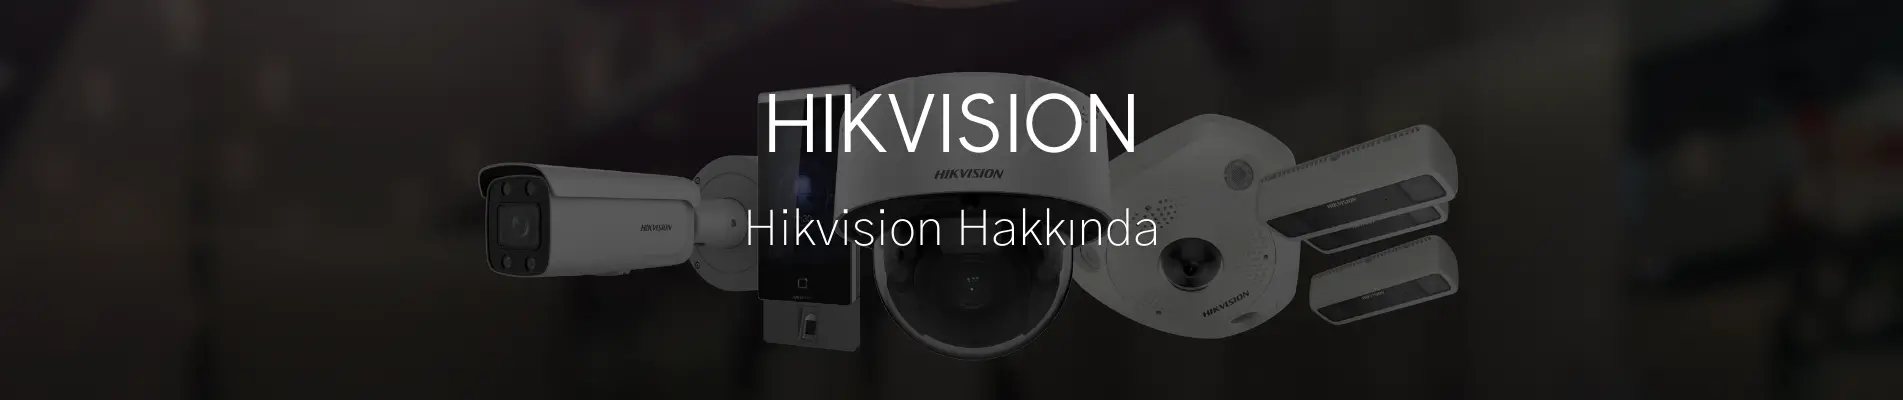 Hikvision hakkında